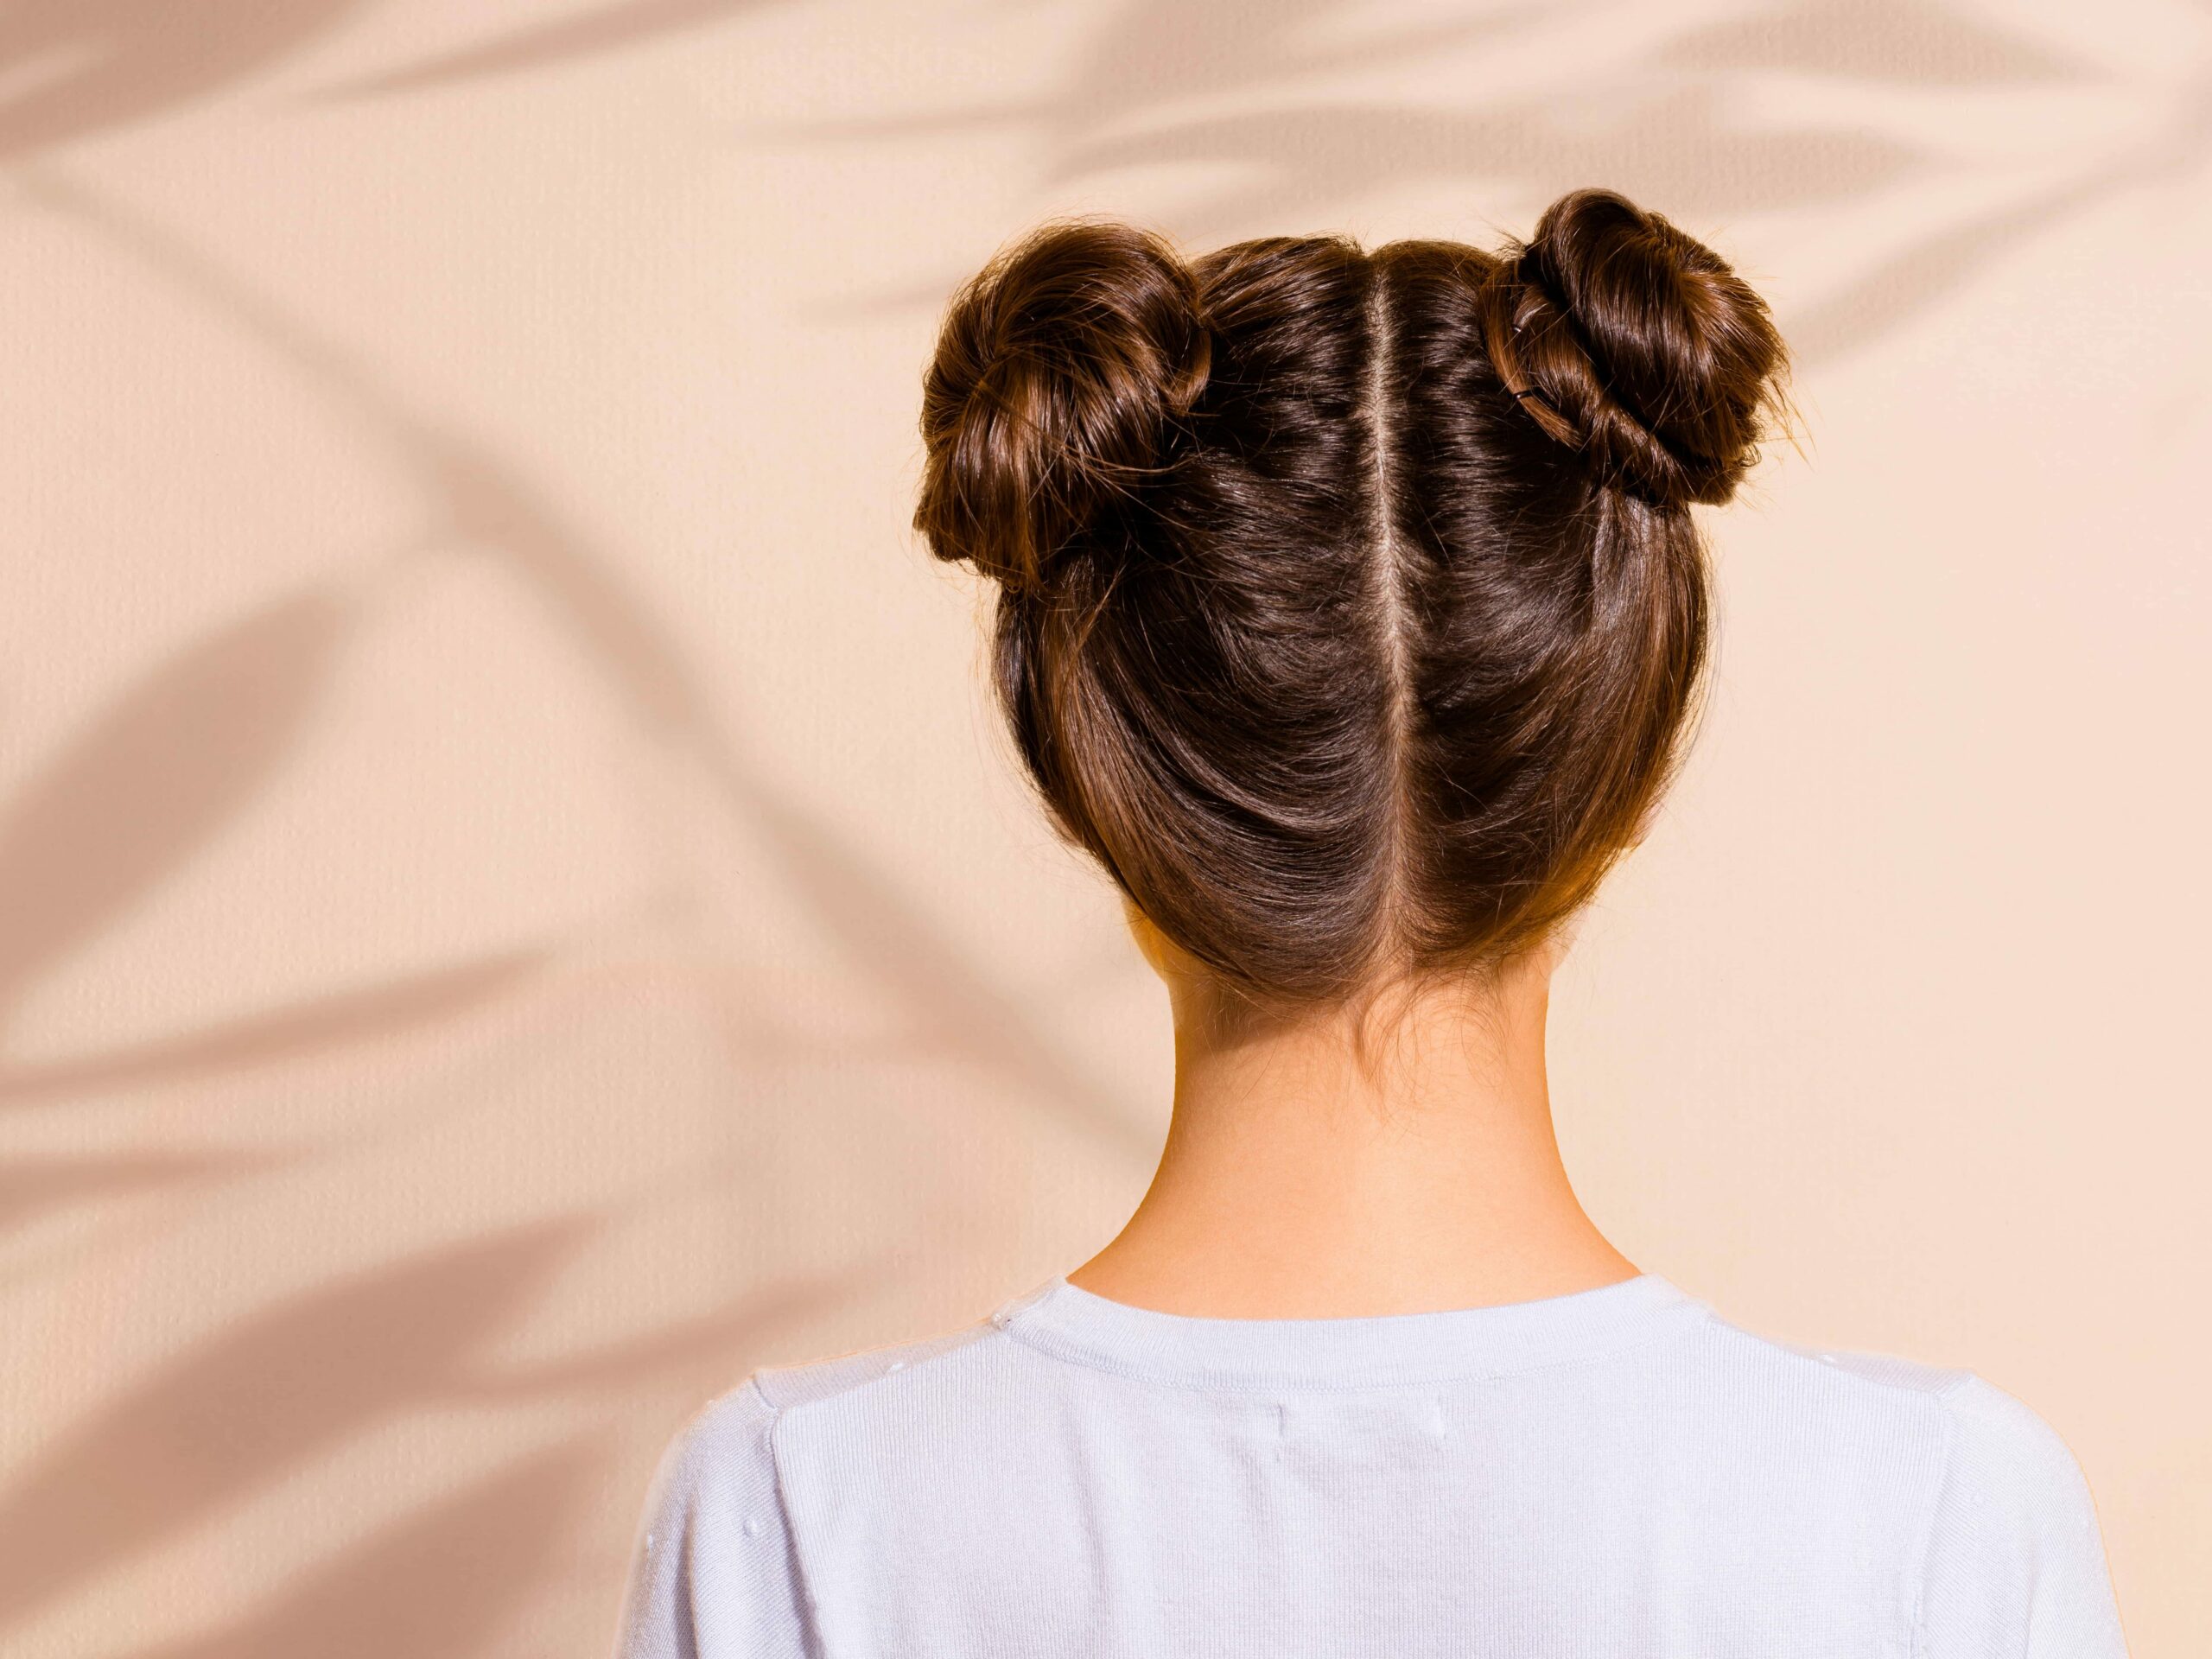 Summer Hairstyles That Both Millennials and Gen Z Will Love